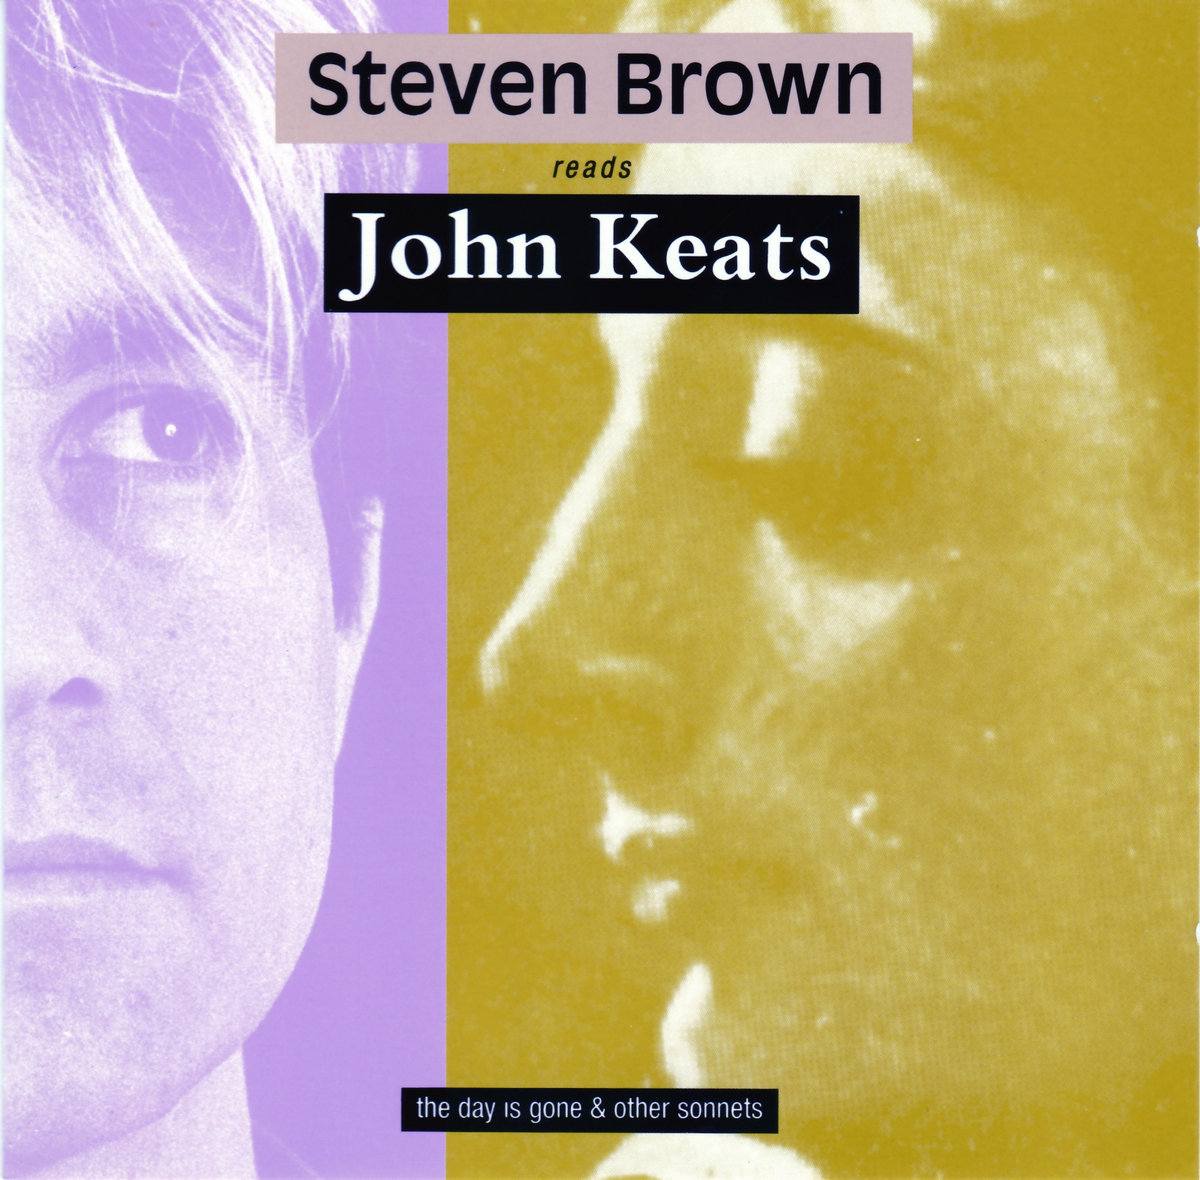 The Day Is Gone & Other Sonnets : Steven Brown reads John Keats | Steven  Brown (Tuxedomoon, Ensamble Kafka) | Sub Rosa Label